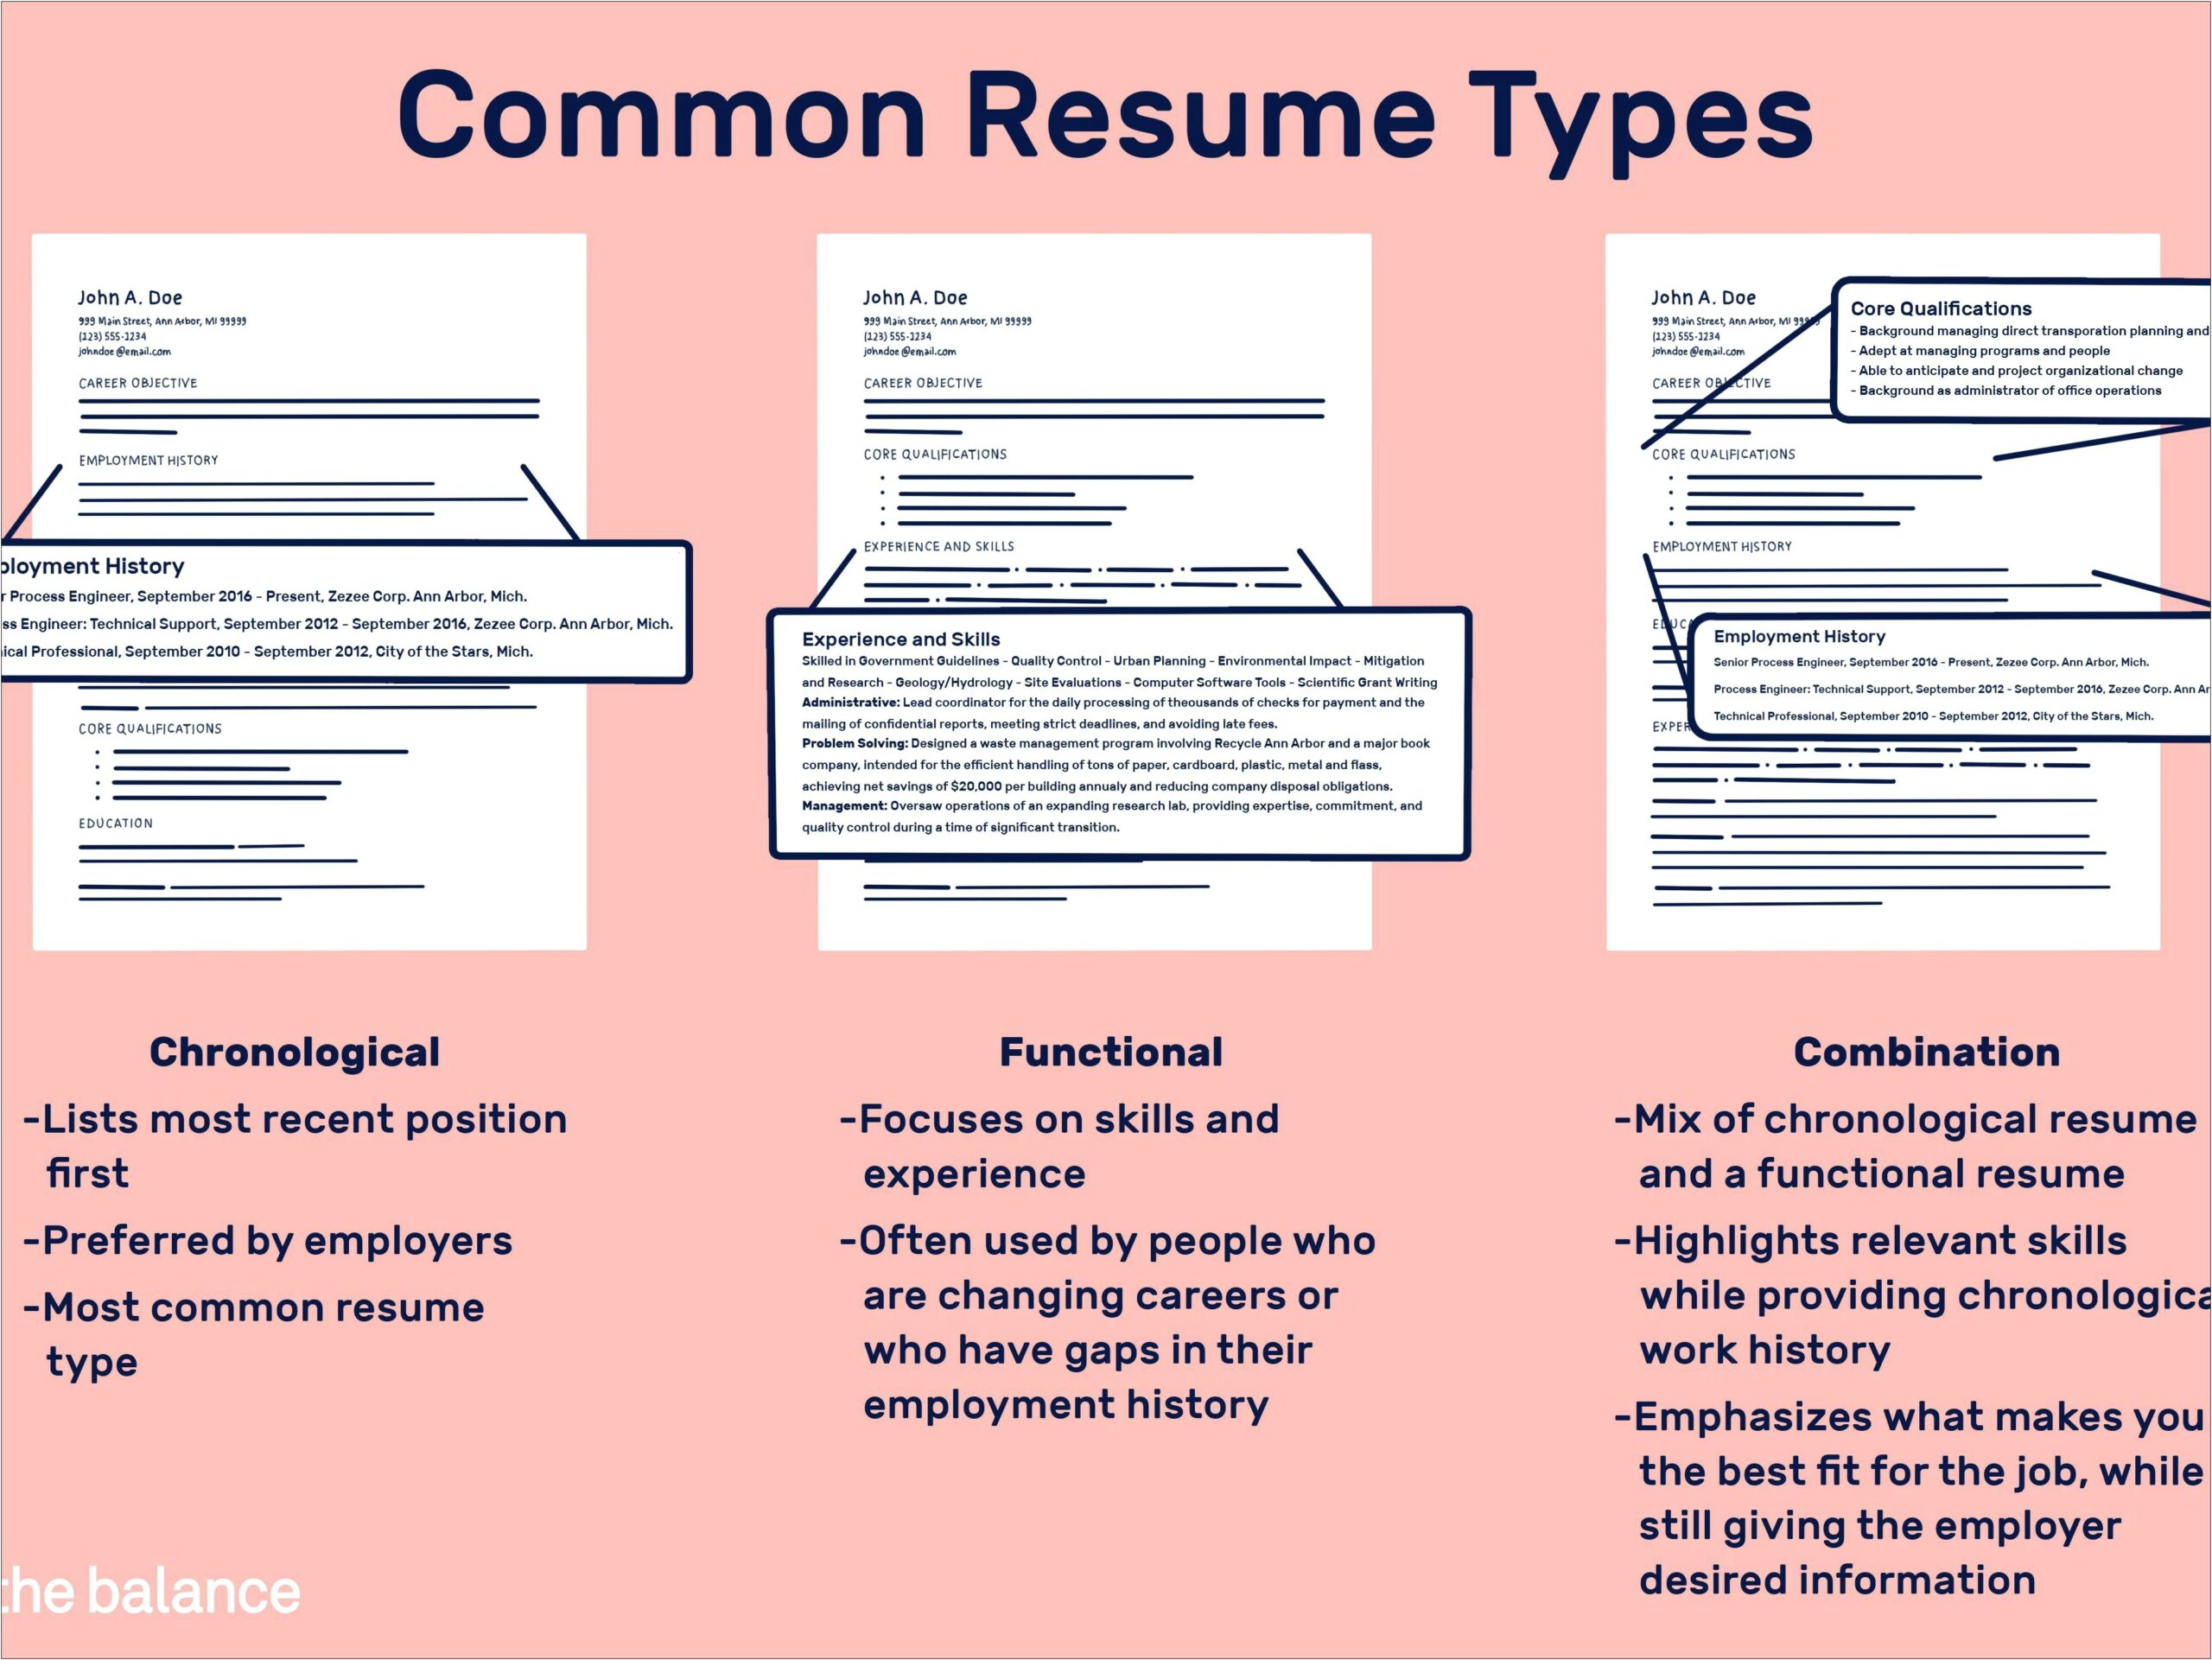 Resume Chronological Order Two Jobs